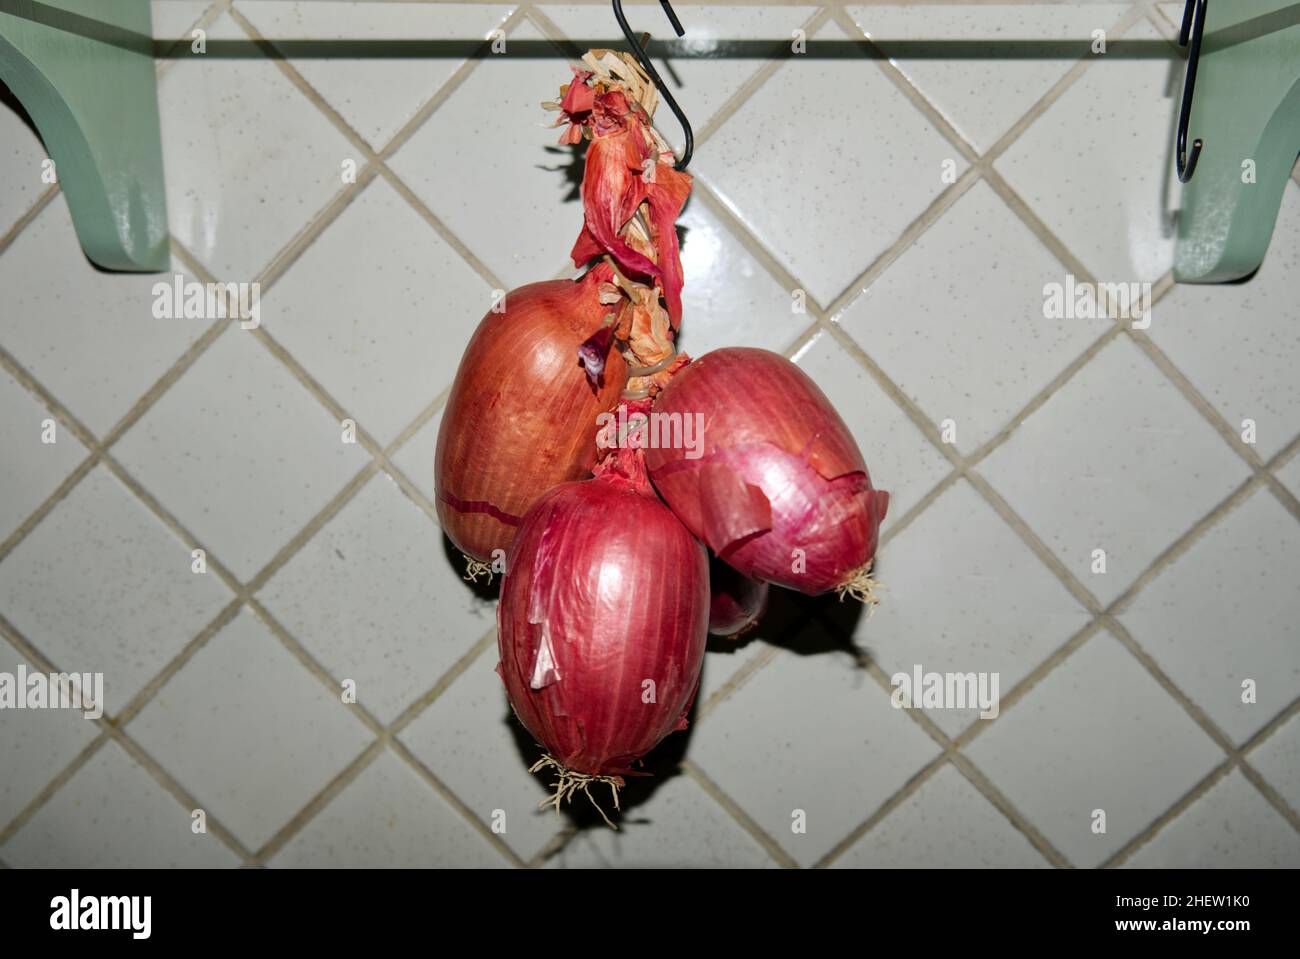 Cucina italiana: Una treccia di cipolline rosse dolci tropea appese in cucina Foto Stock